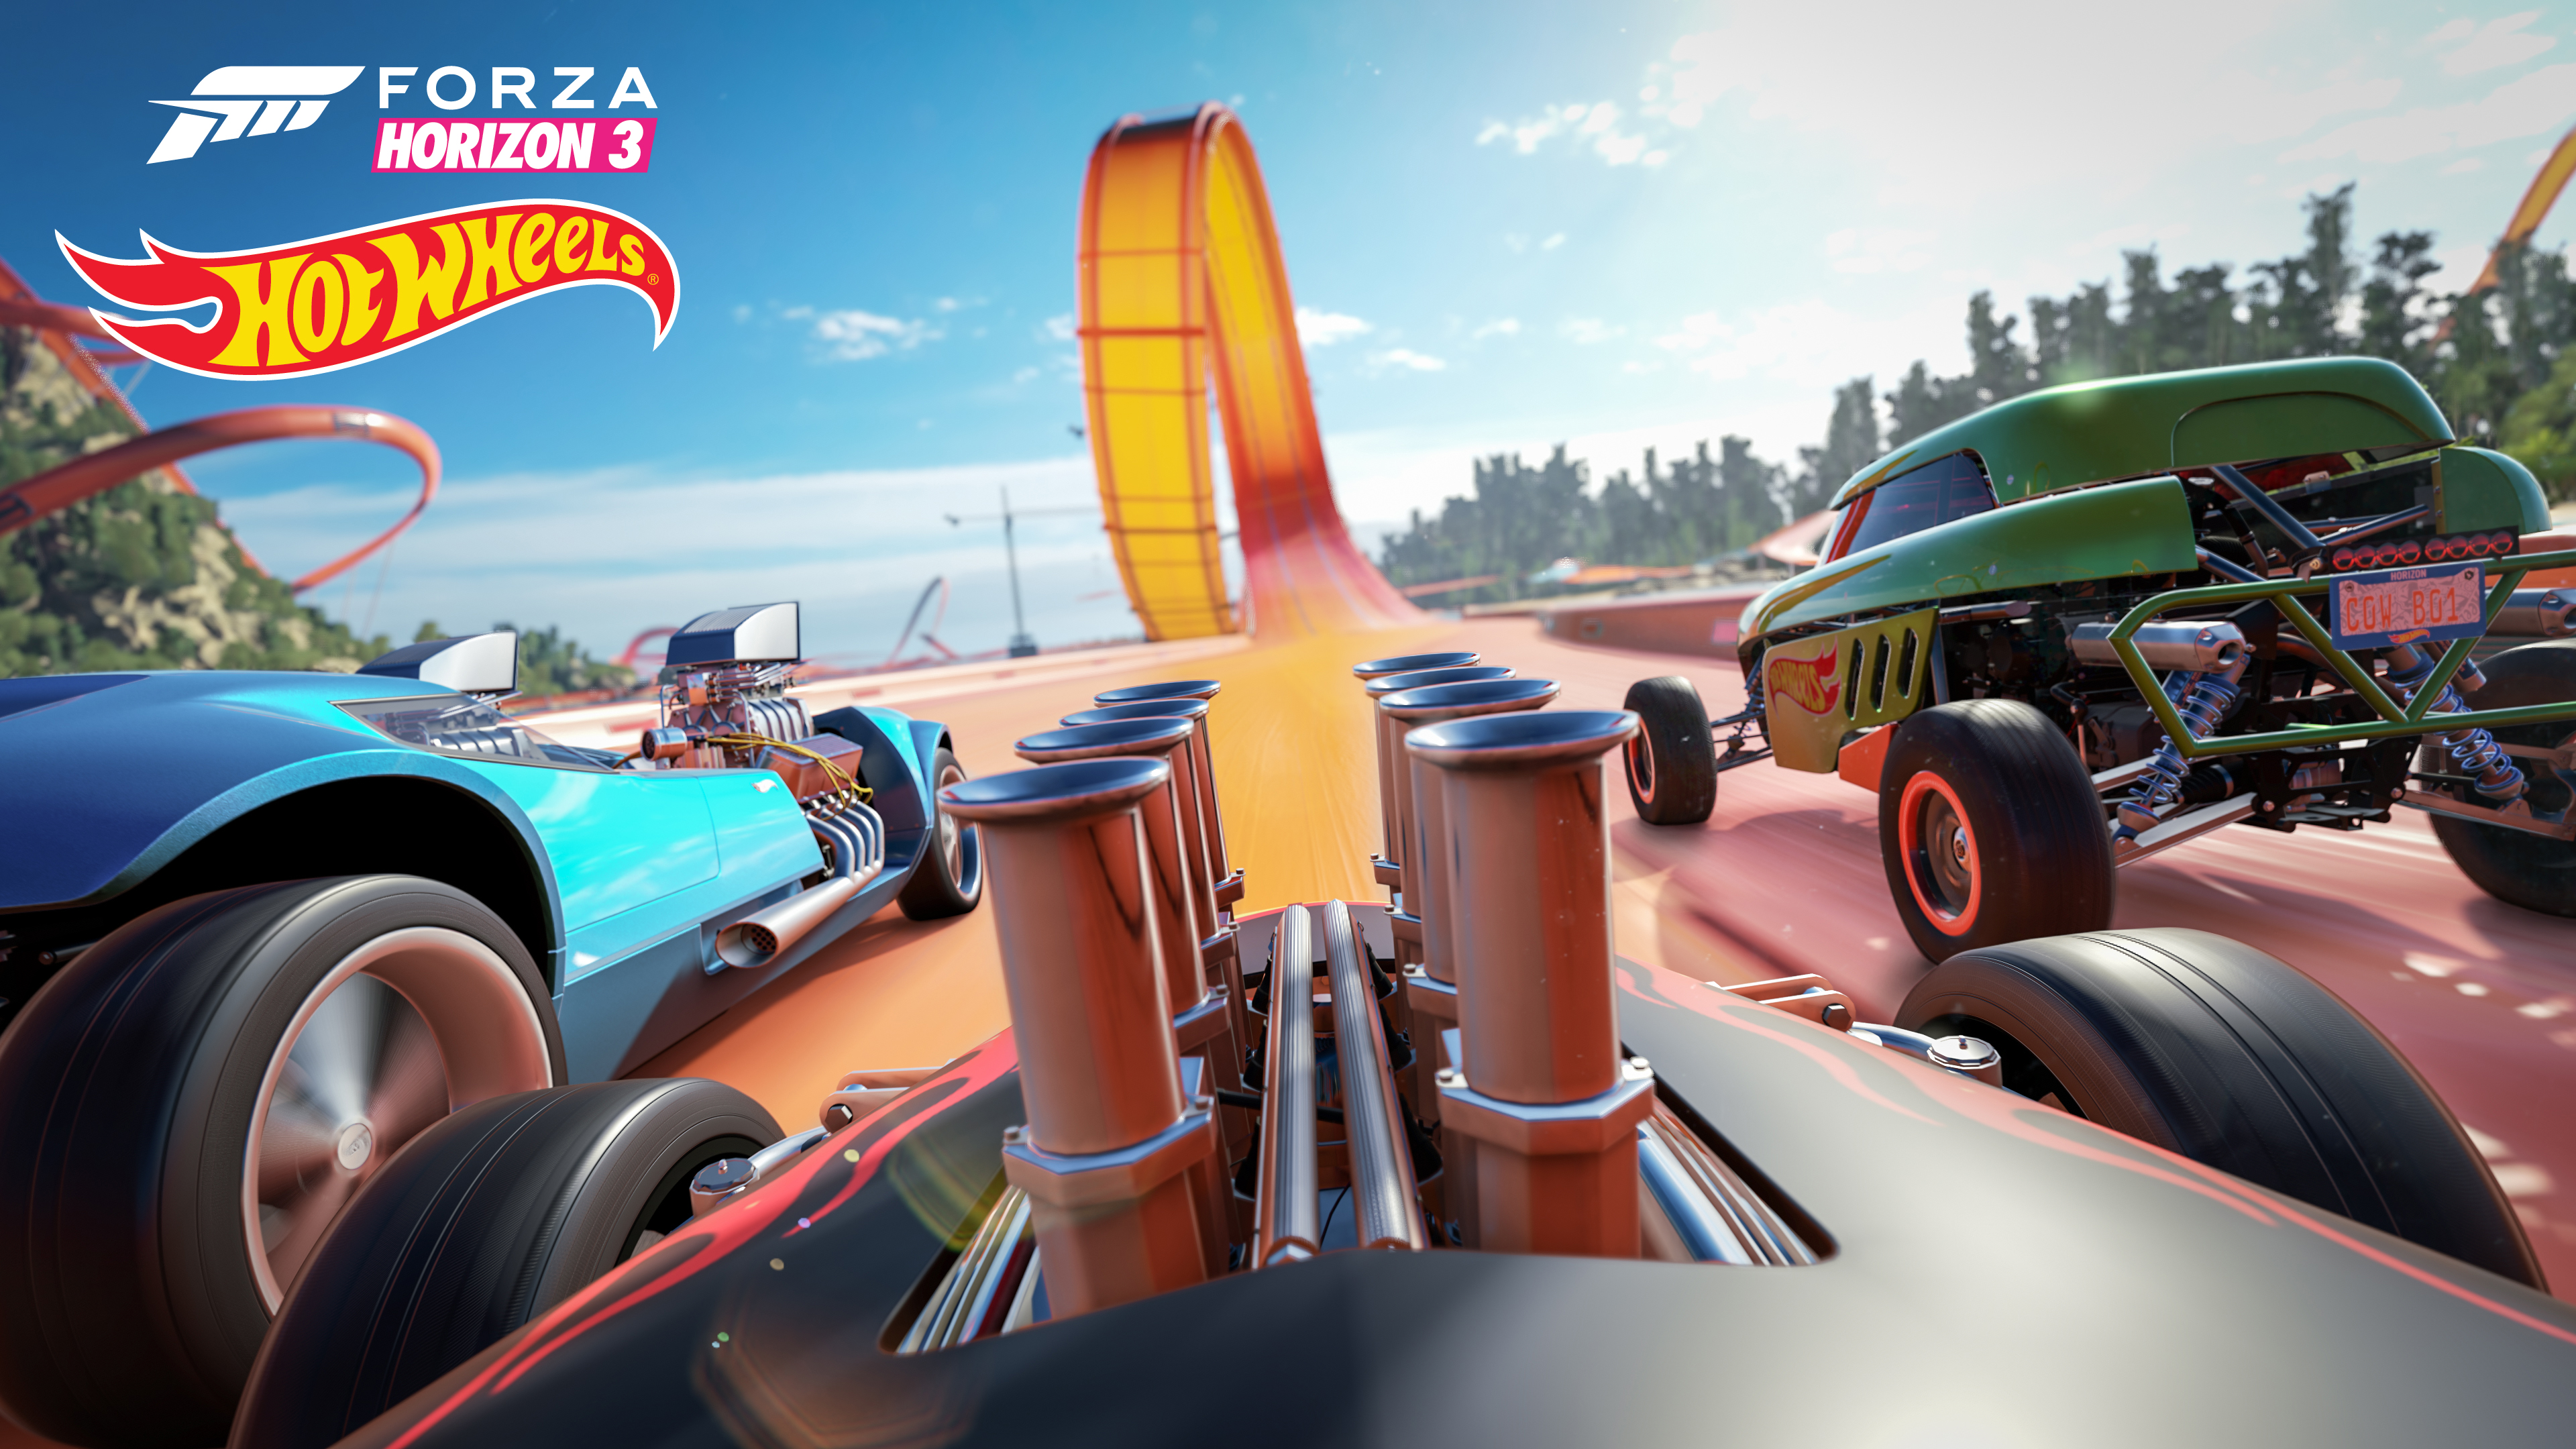 Forza Horizon 3 Hot Wheels Racetrack View